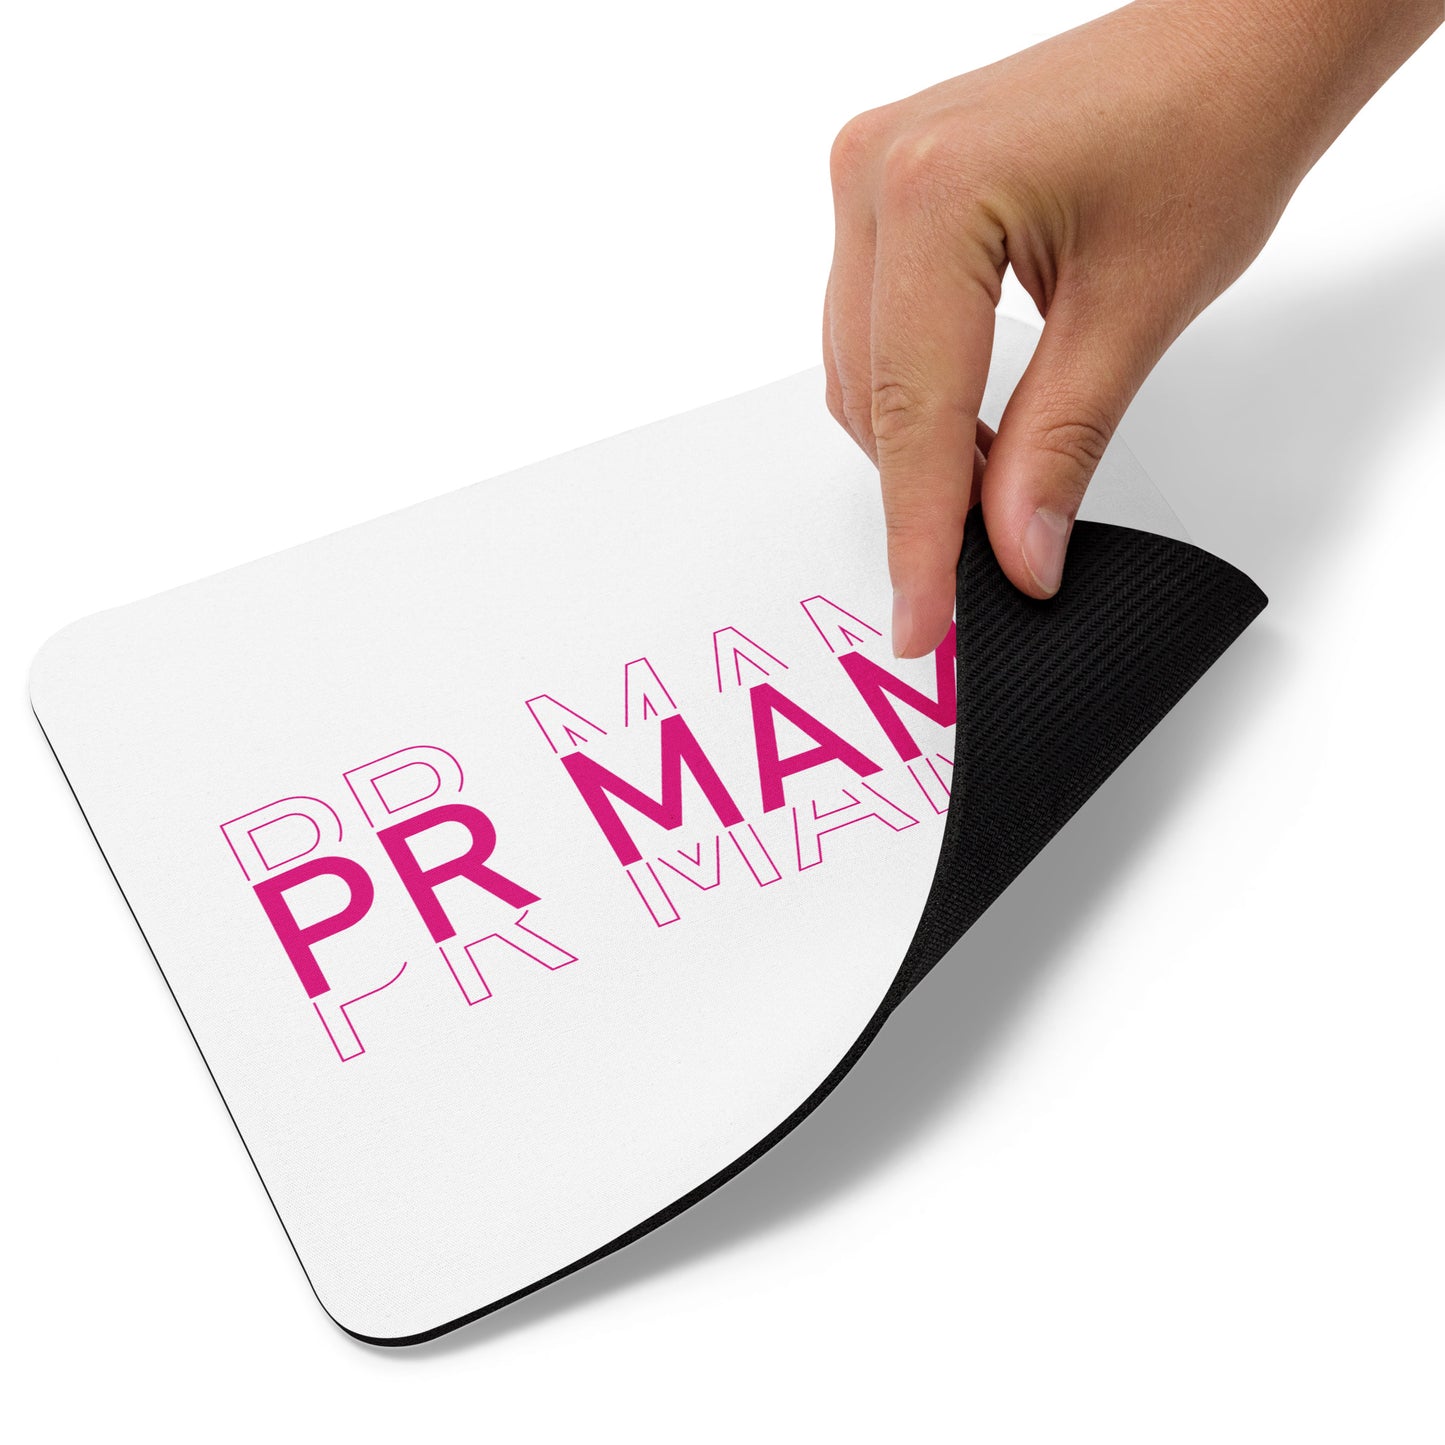 PR MAMA Printed Mouse pad